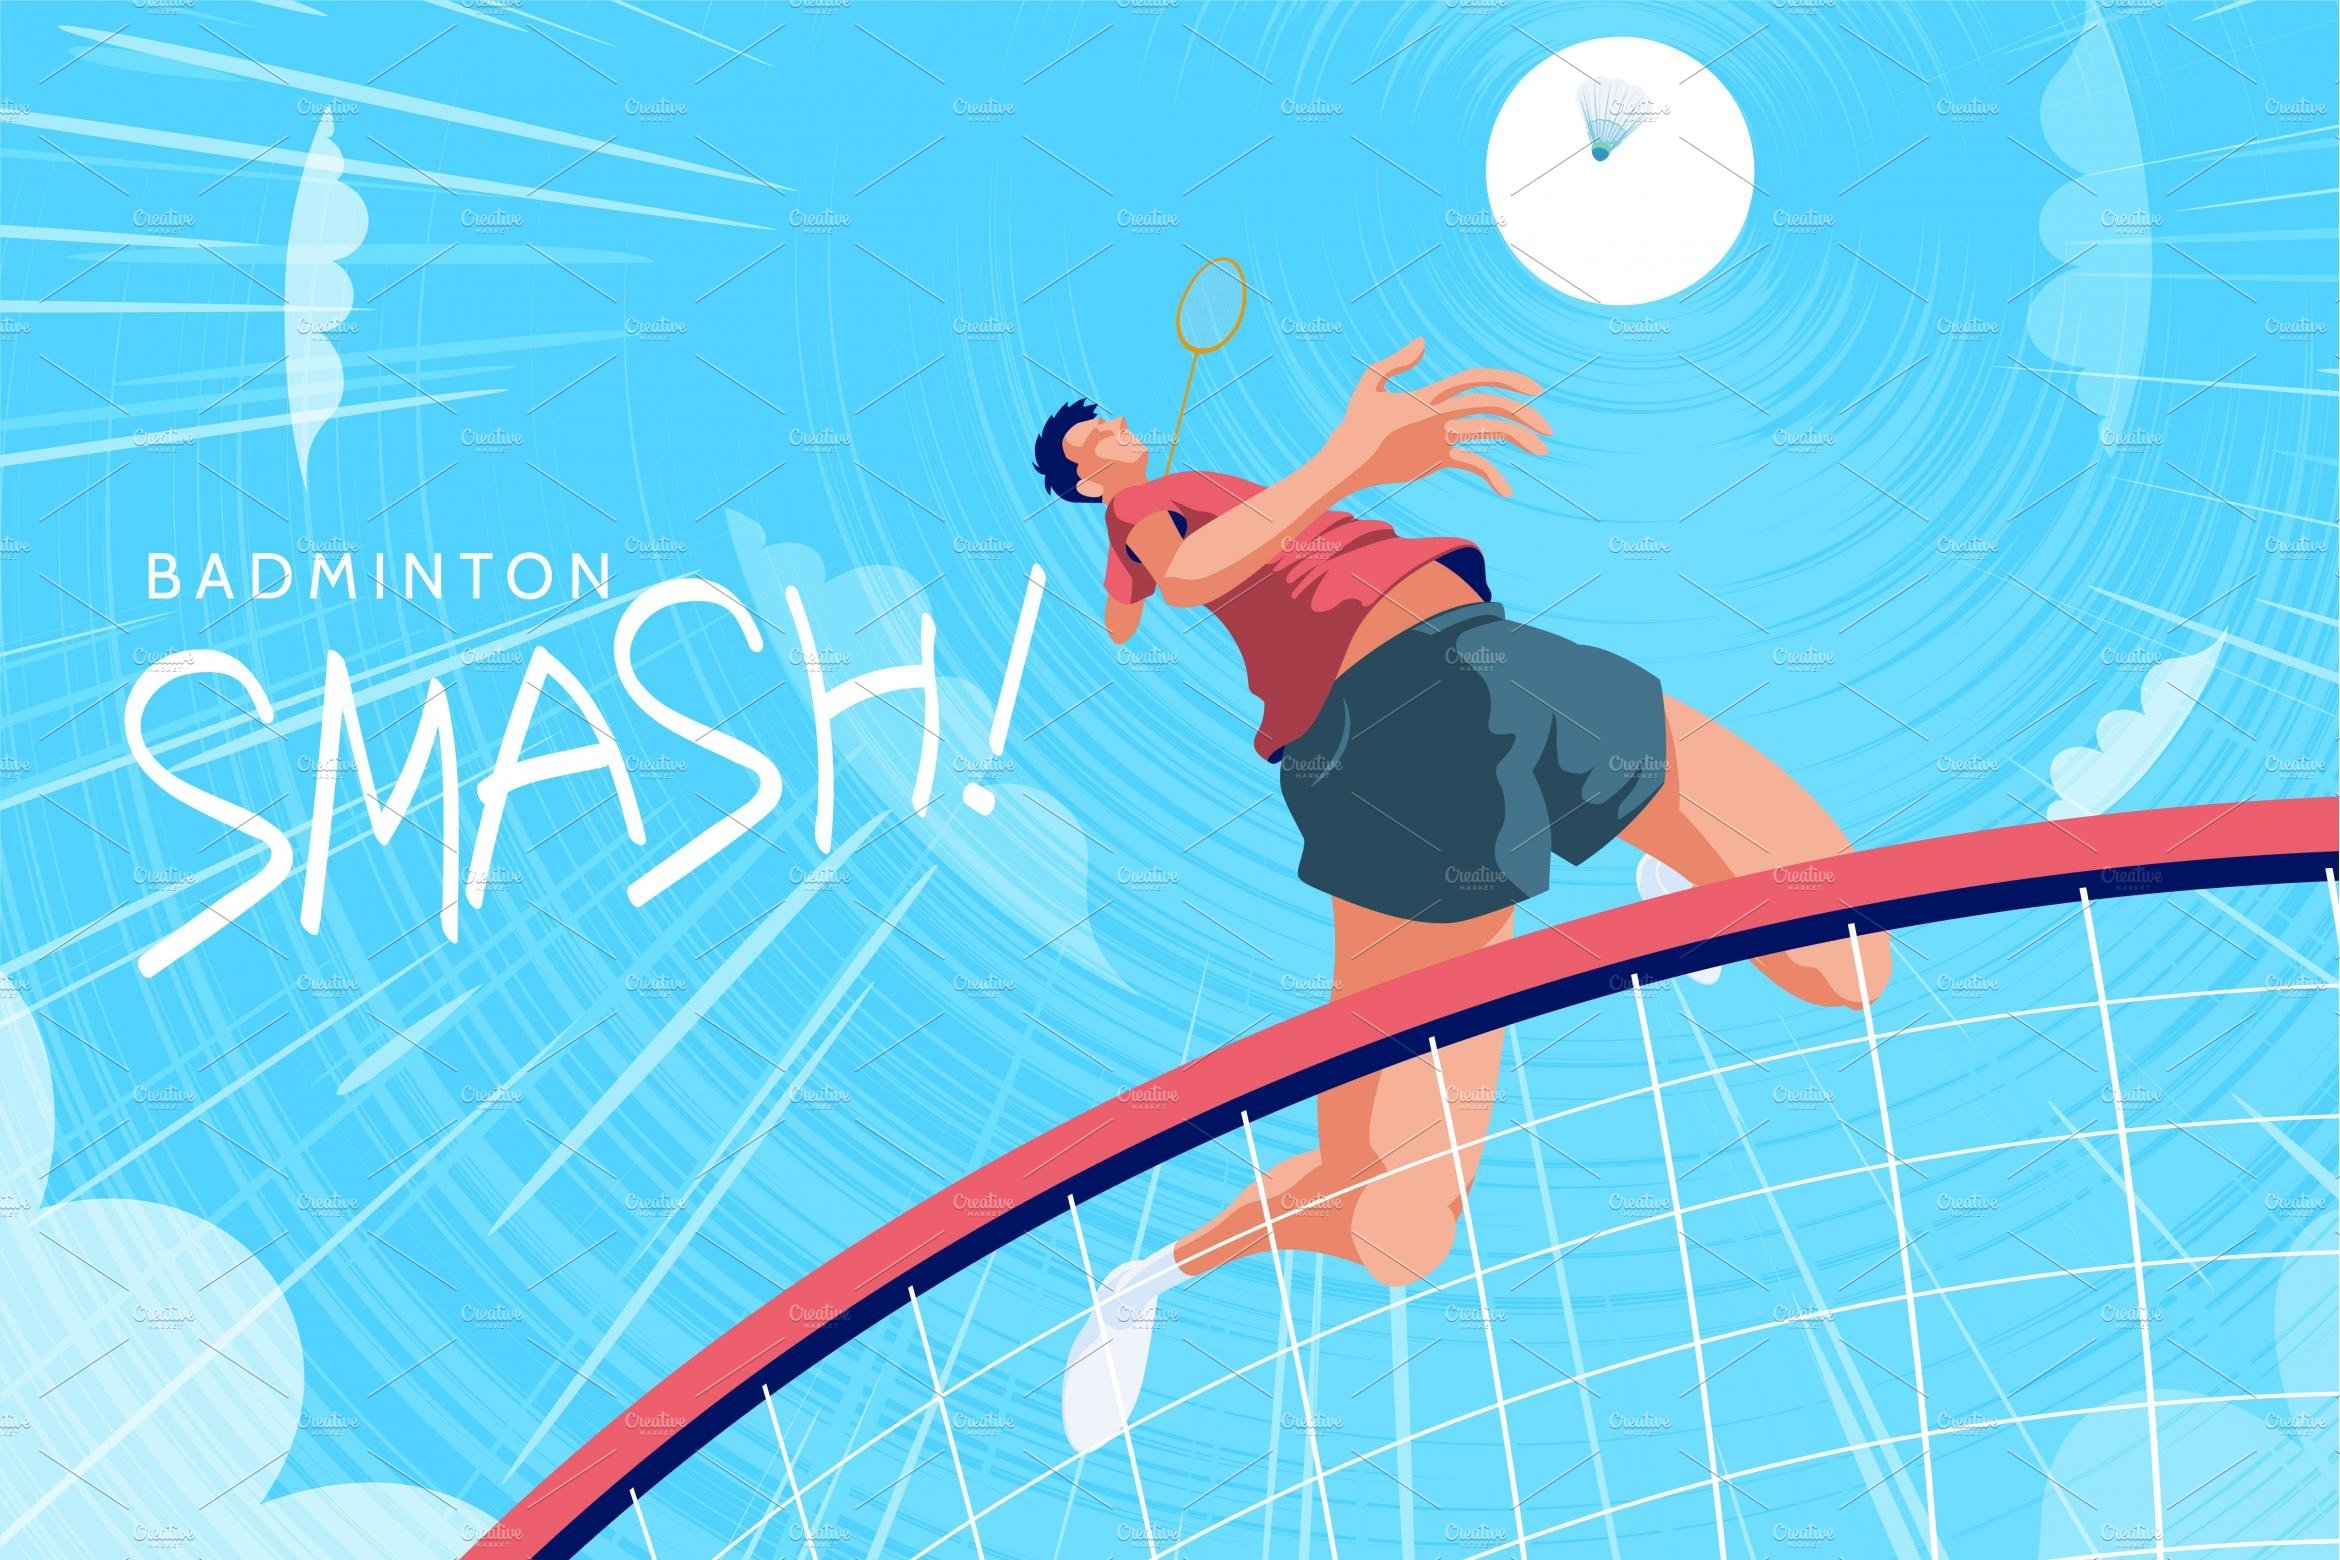 Badminton tournament poster cover image.